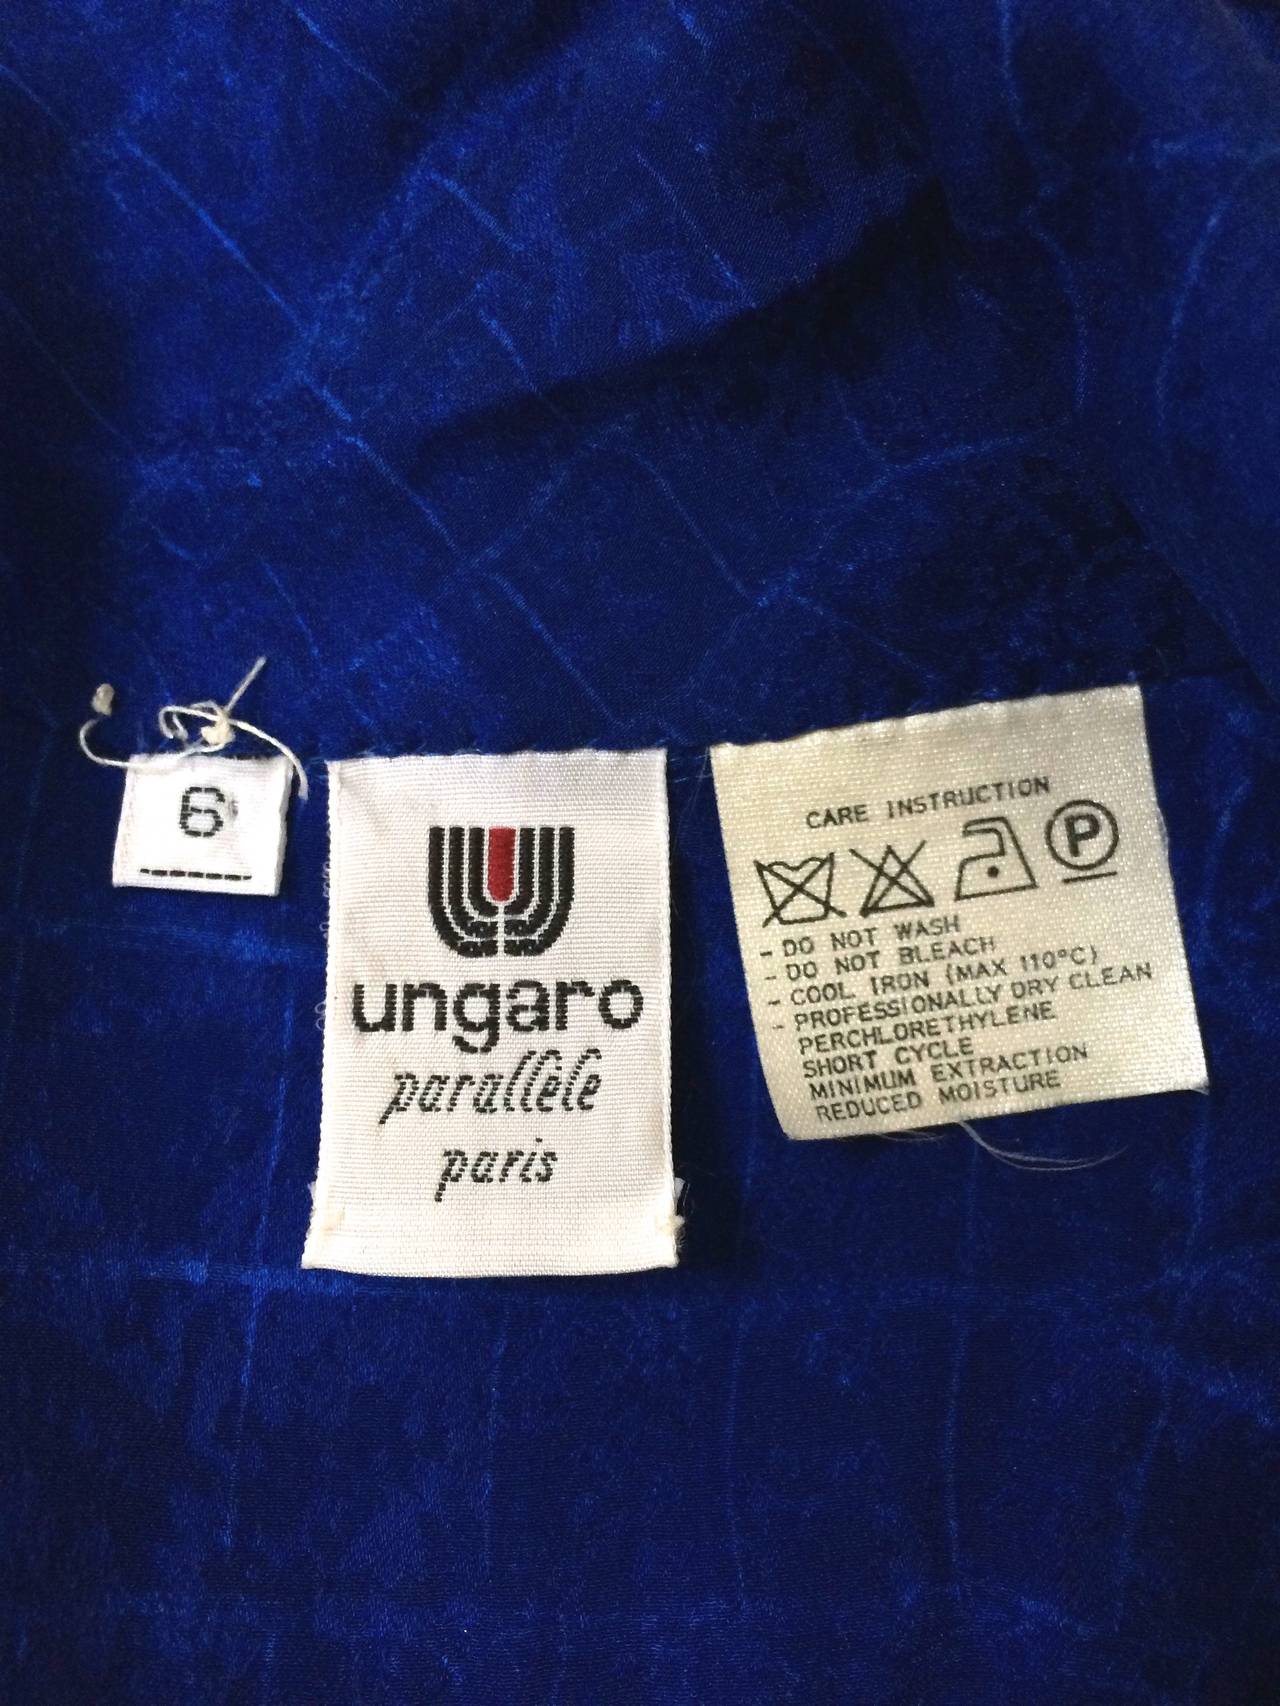 Ungaro Parallele Paris 80s silk dress size 6. 5